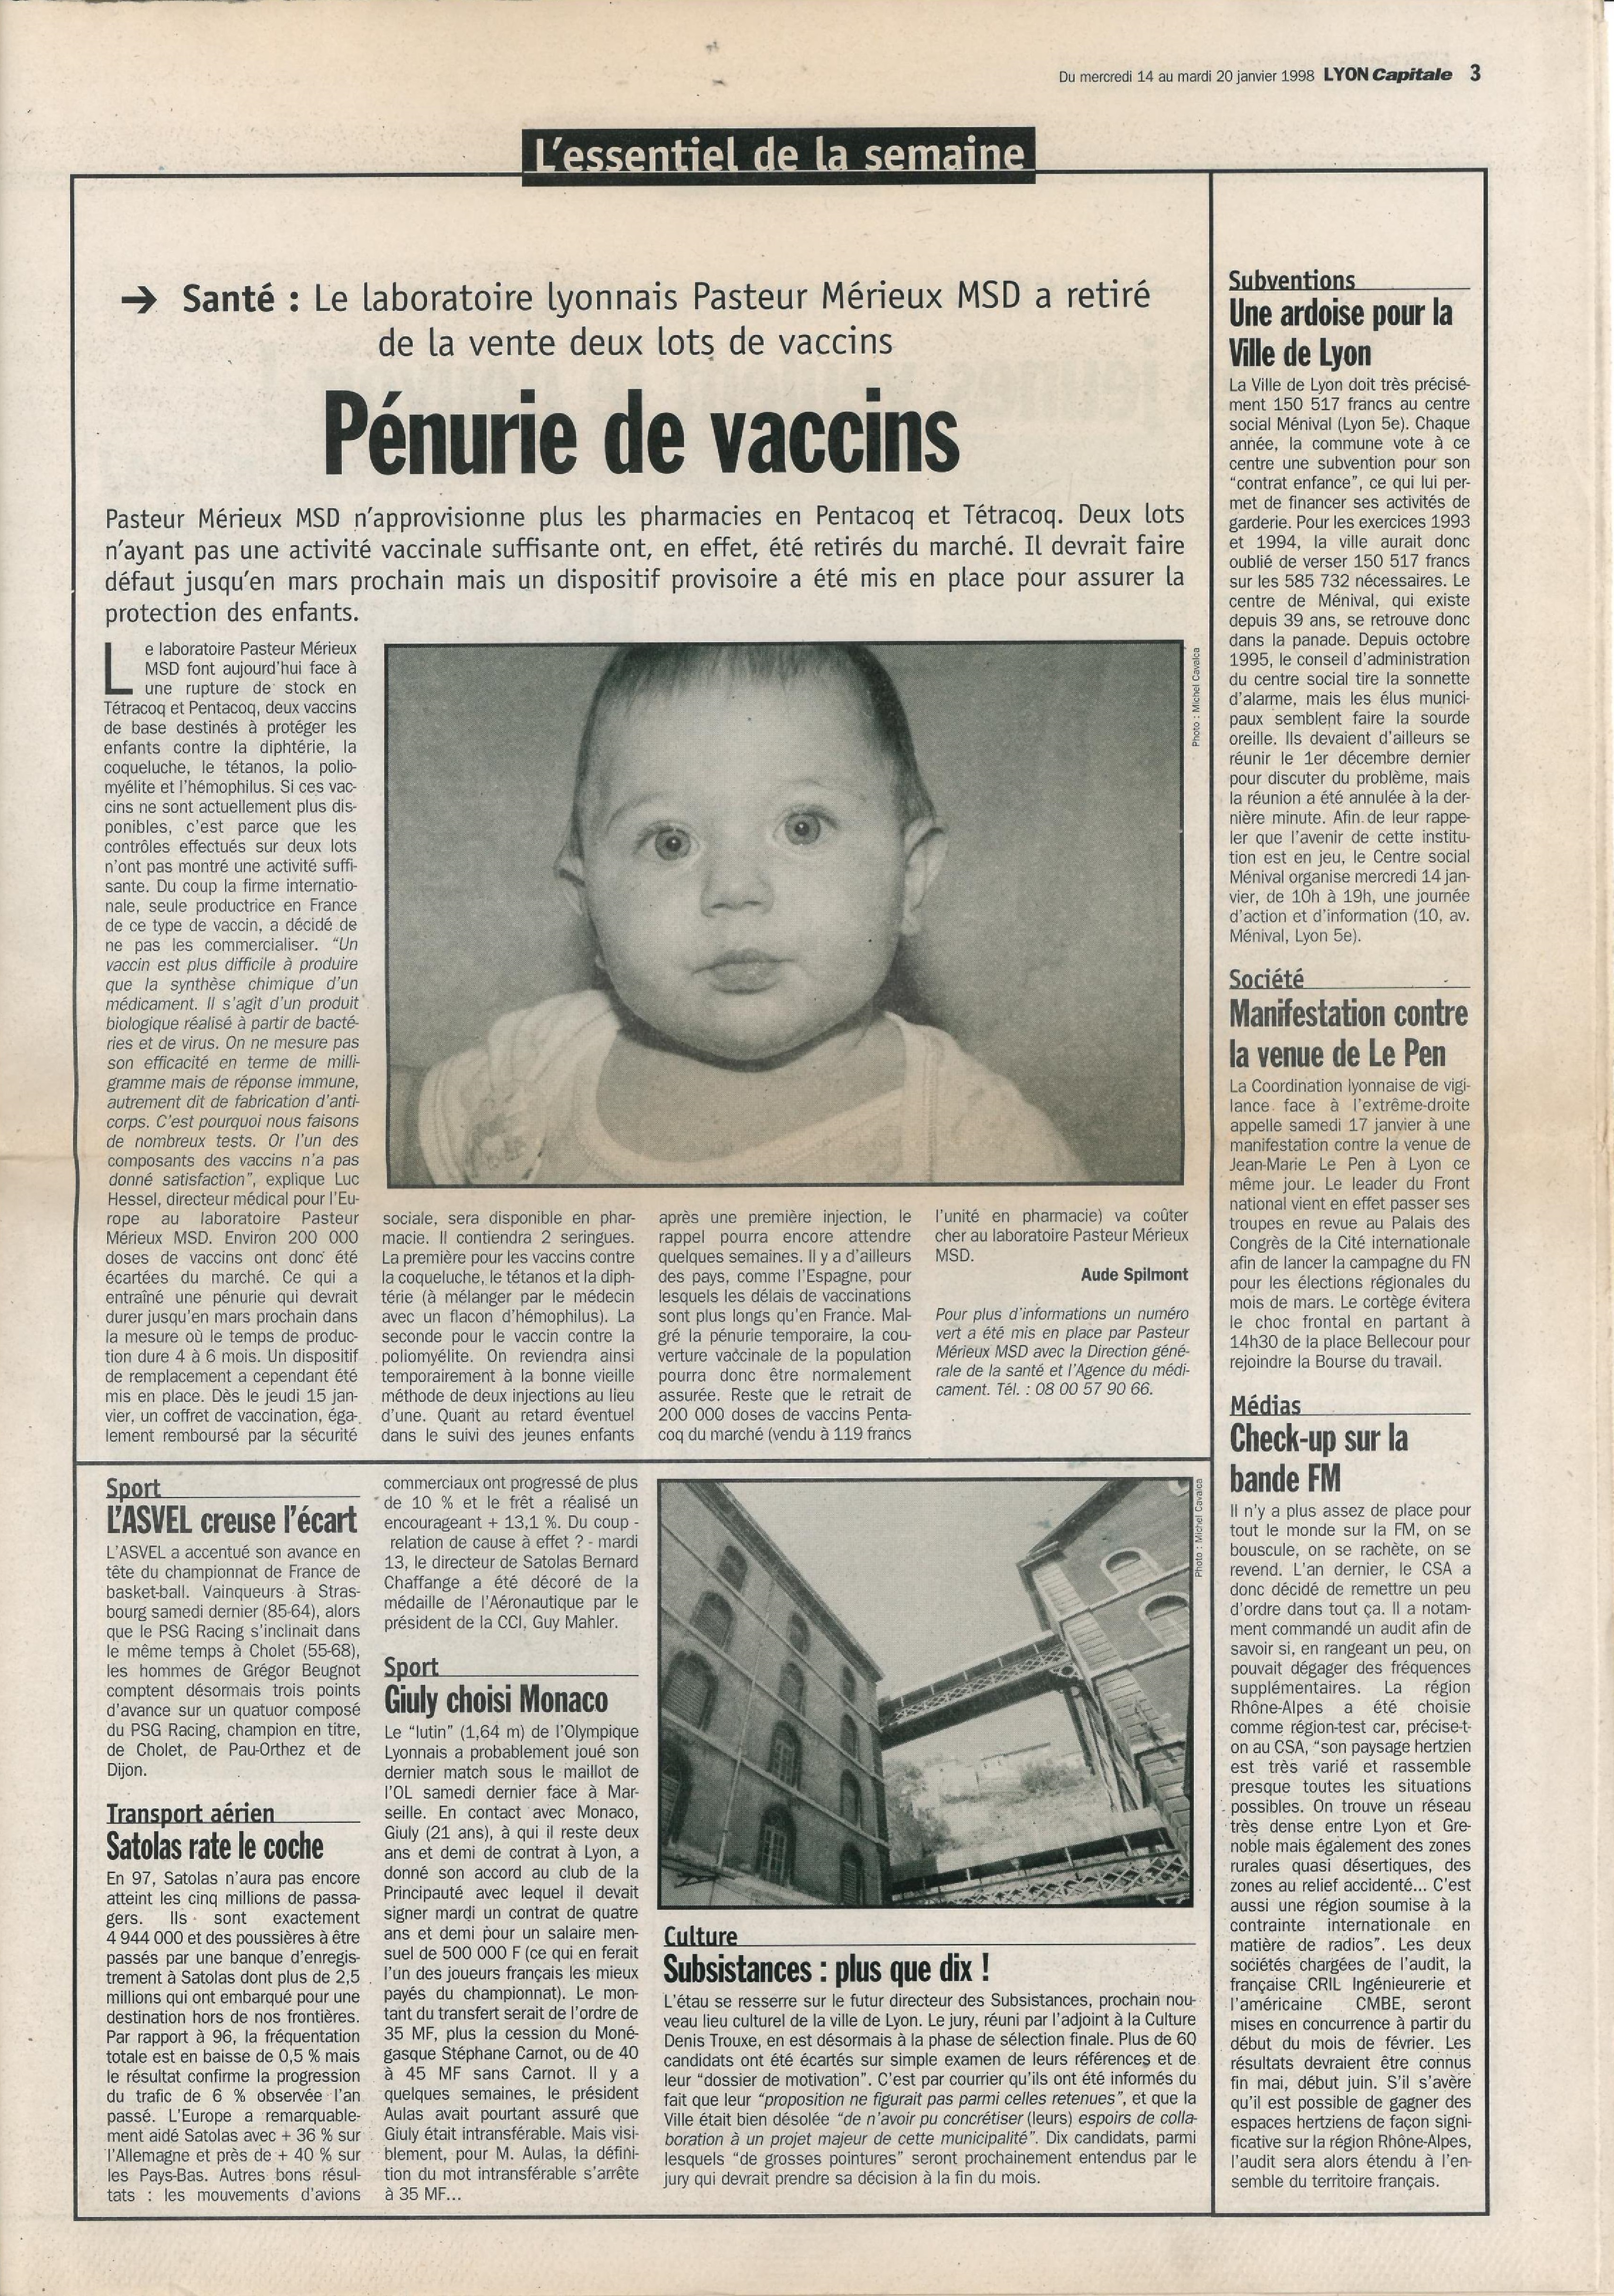 Lyon Capitale n°154, 14 janvier 1998, p. 3 © Lyon Capitale